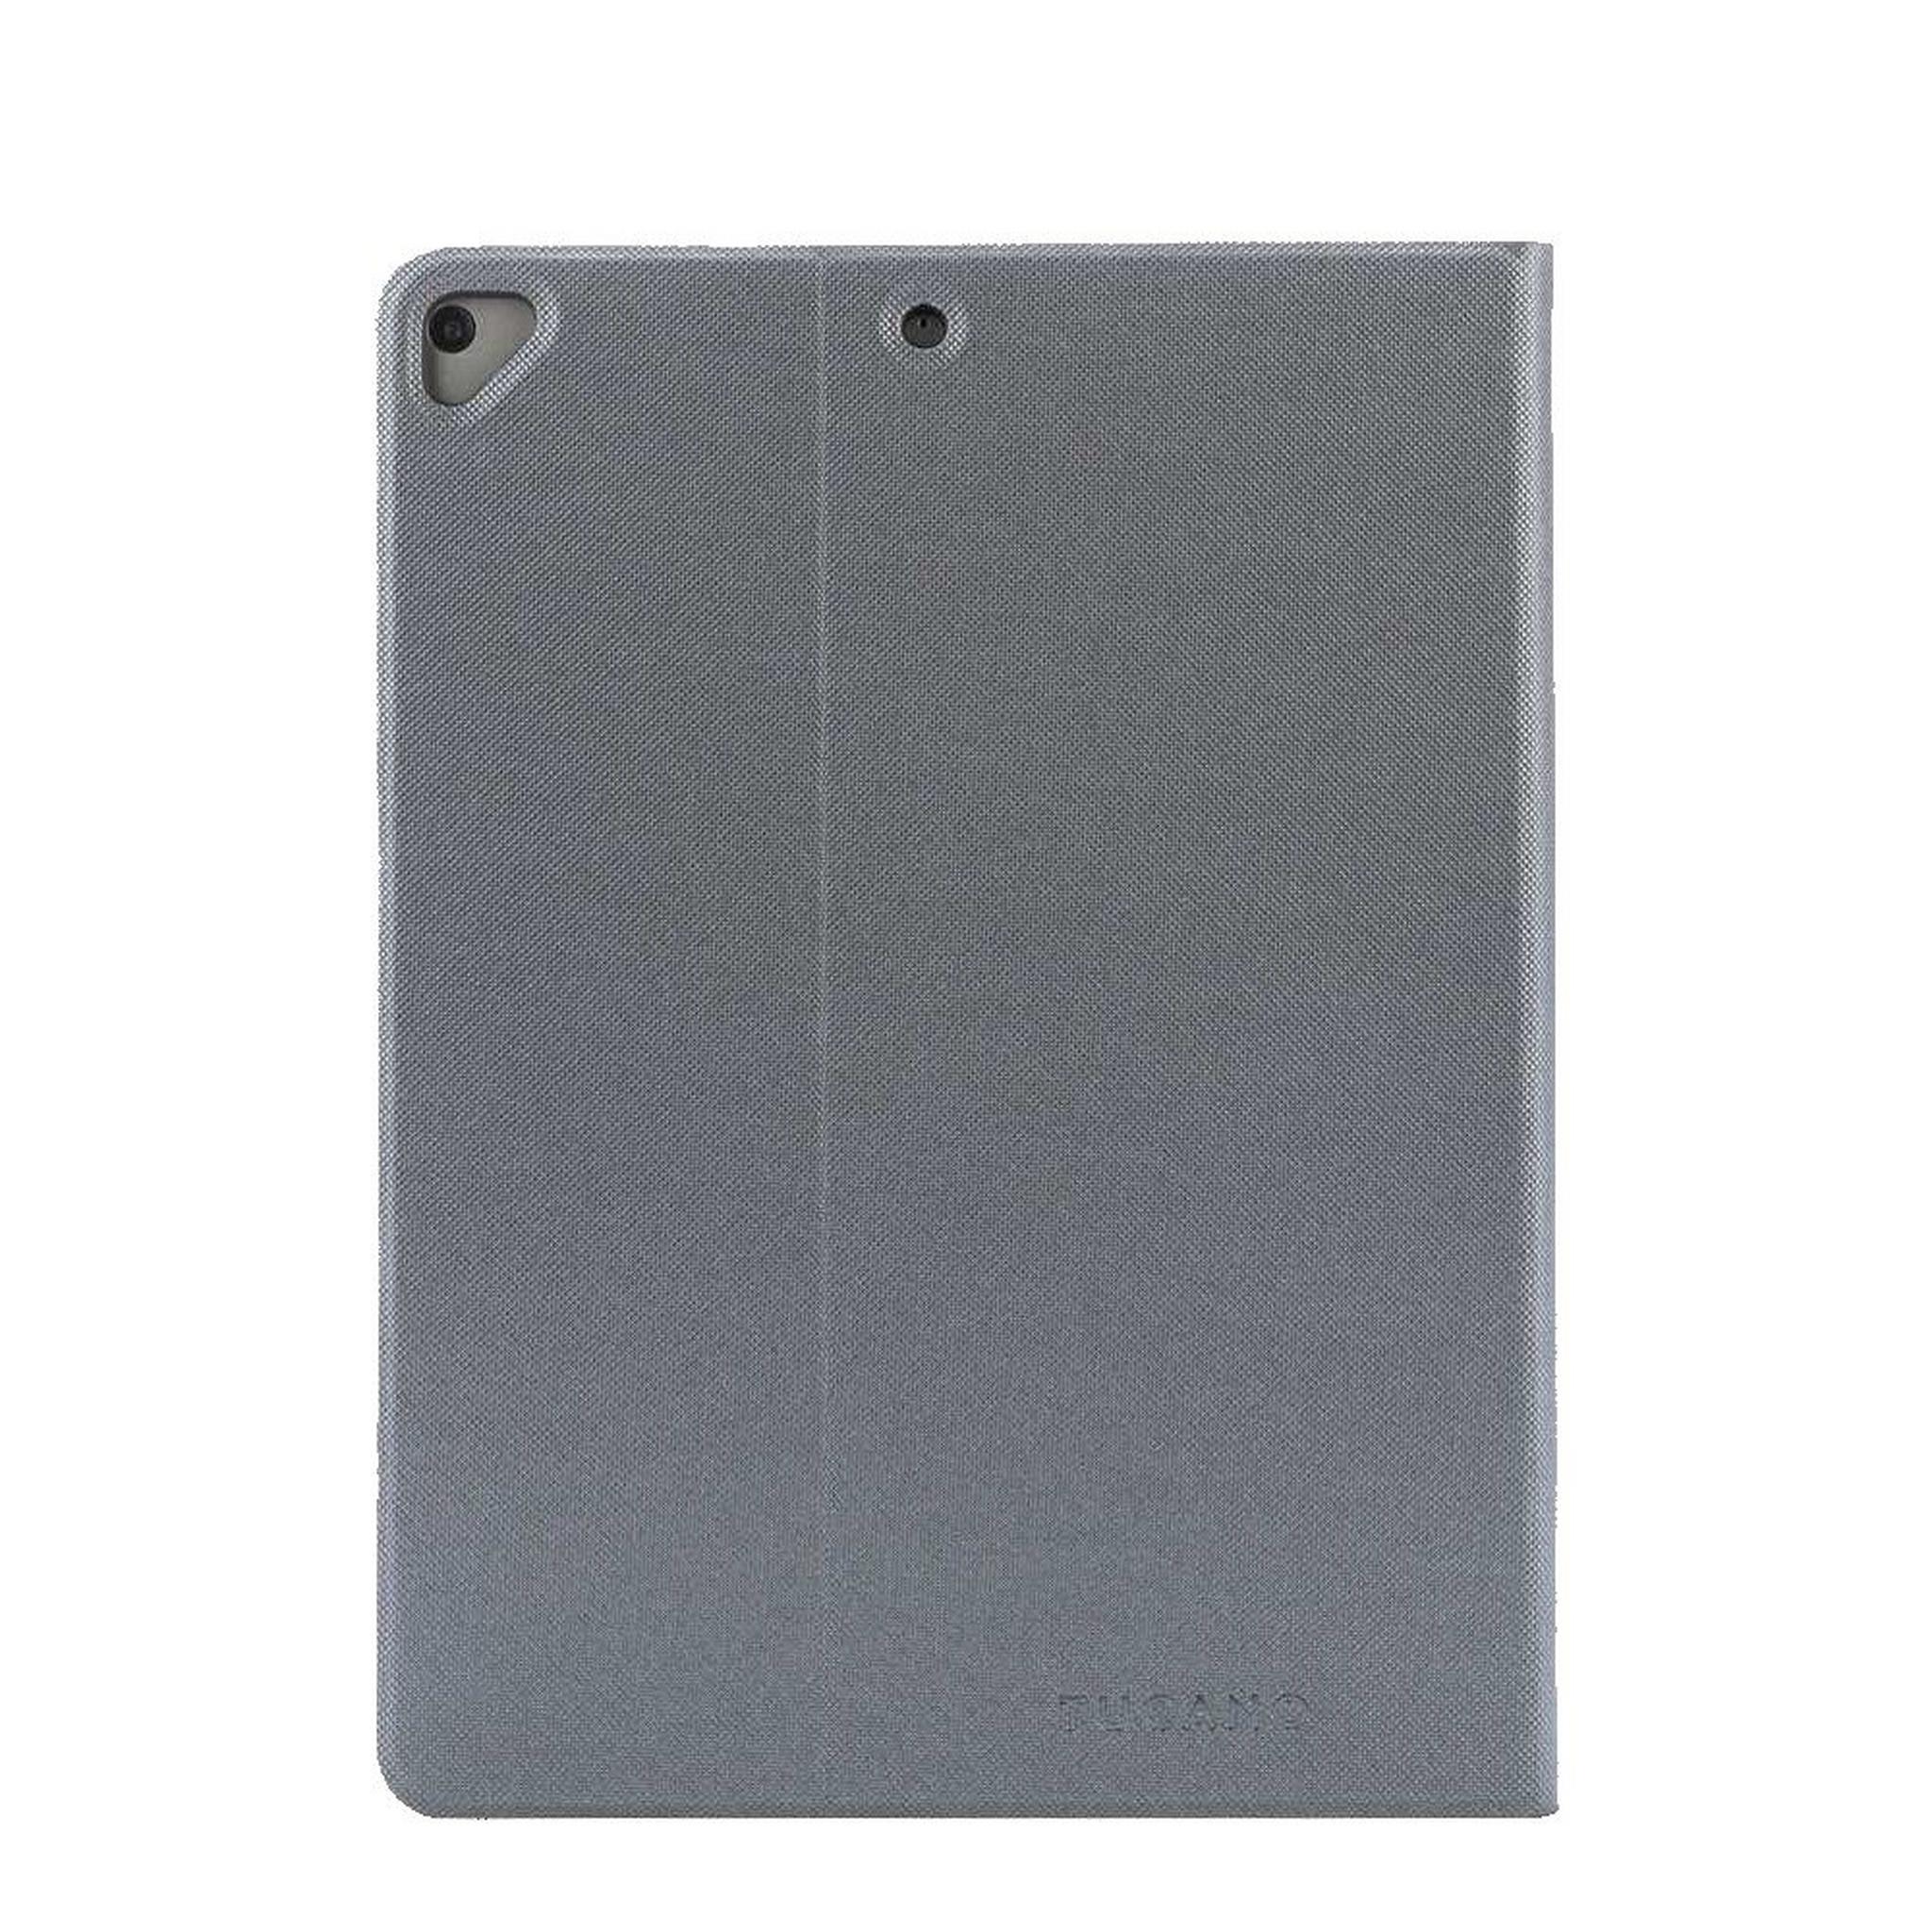 Tucano Up Plus Folio Case for iPad 10.2-Inch and iPad Air 10.5-Inch, IPD102UPP-DG - Grey